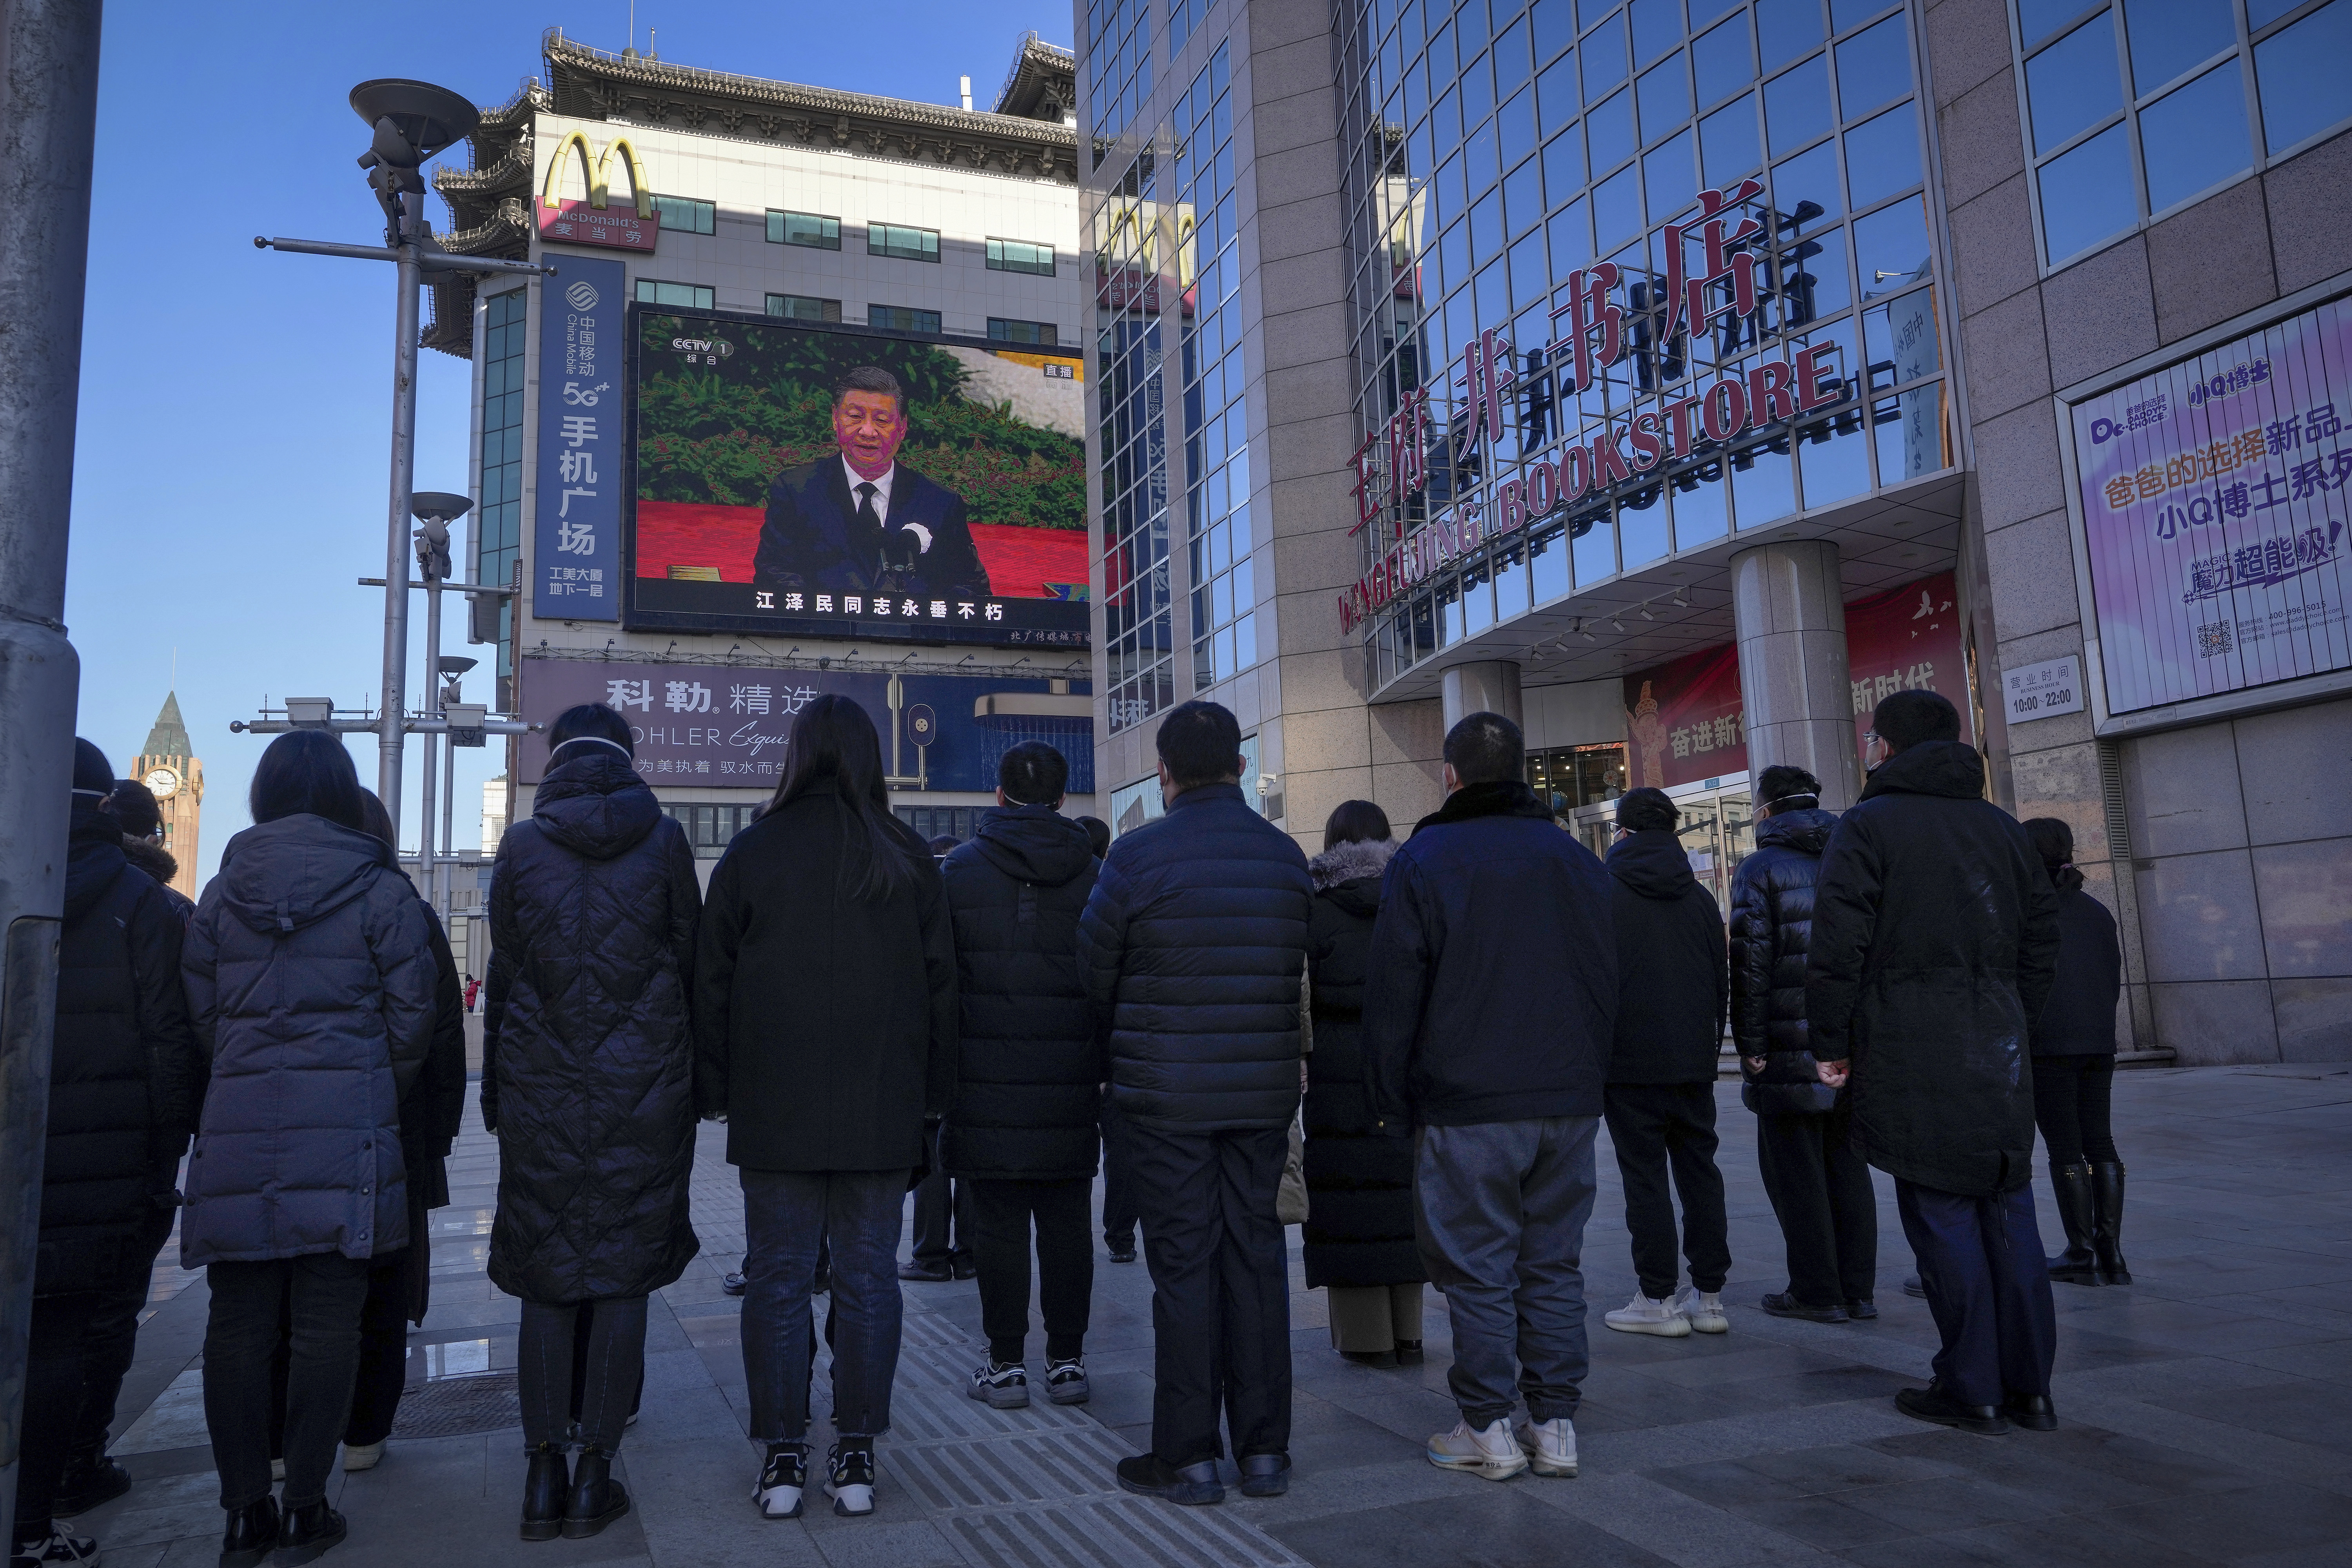 People watch a live broadcast of a speech by XI Jinping, on the Wangfujing shopping street in Beijing (AP)